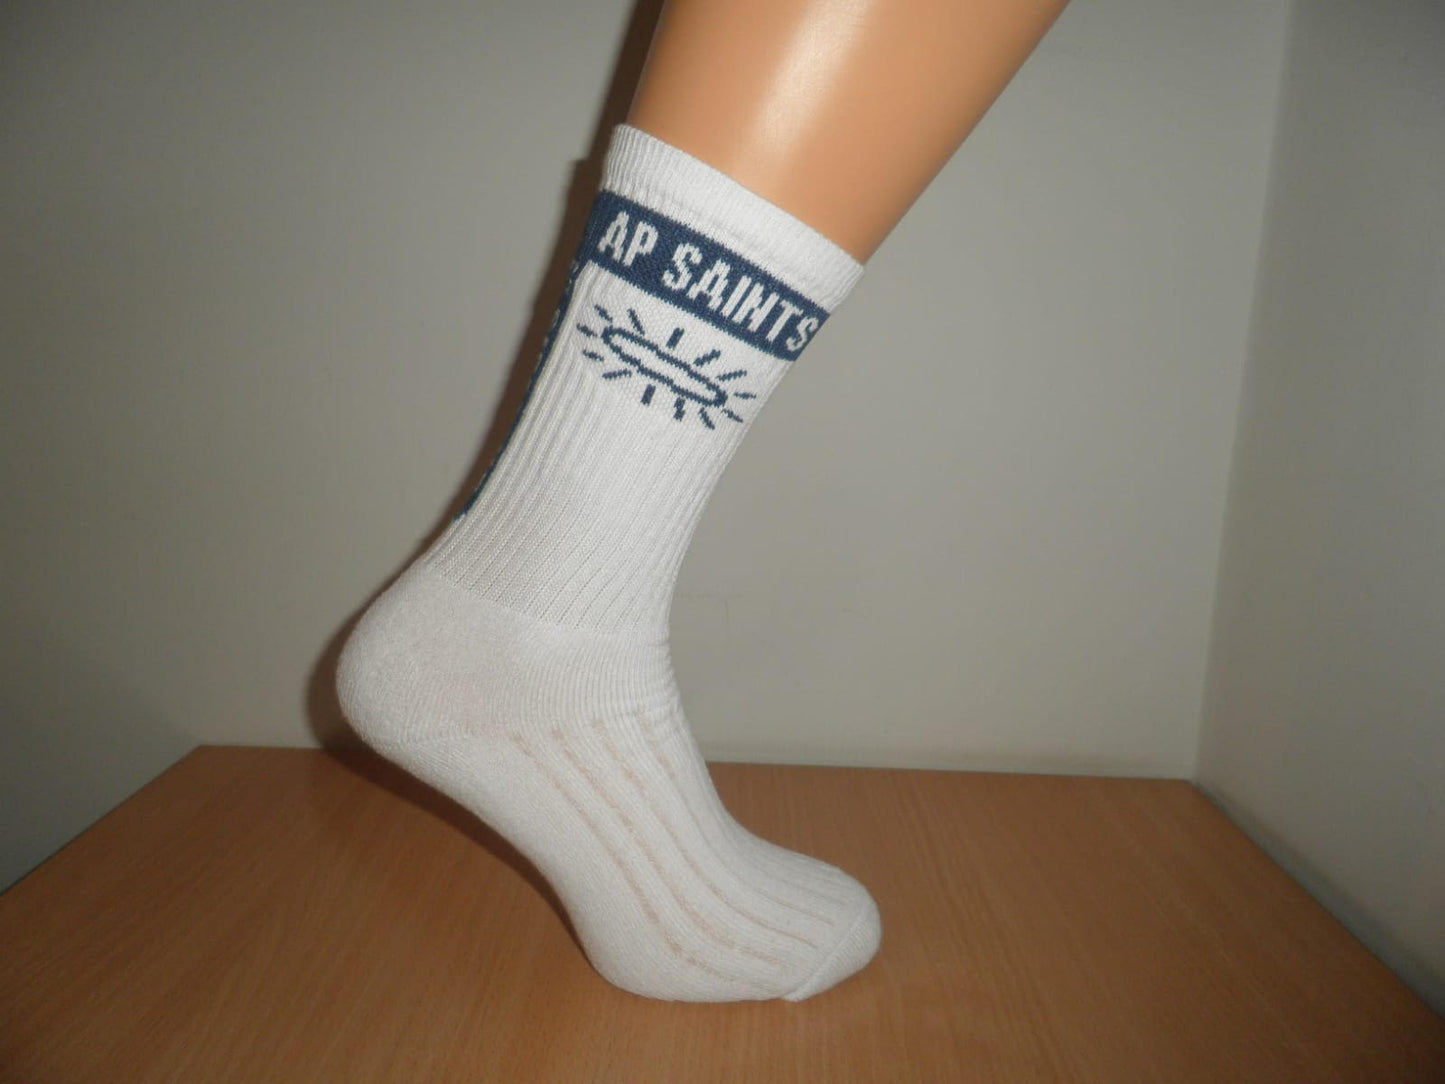 AP Saints Socks